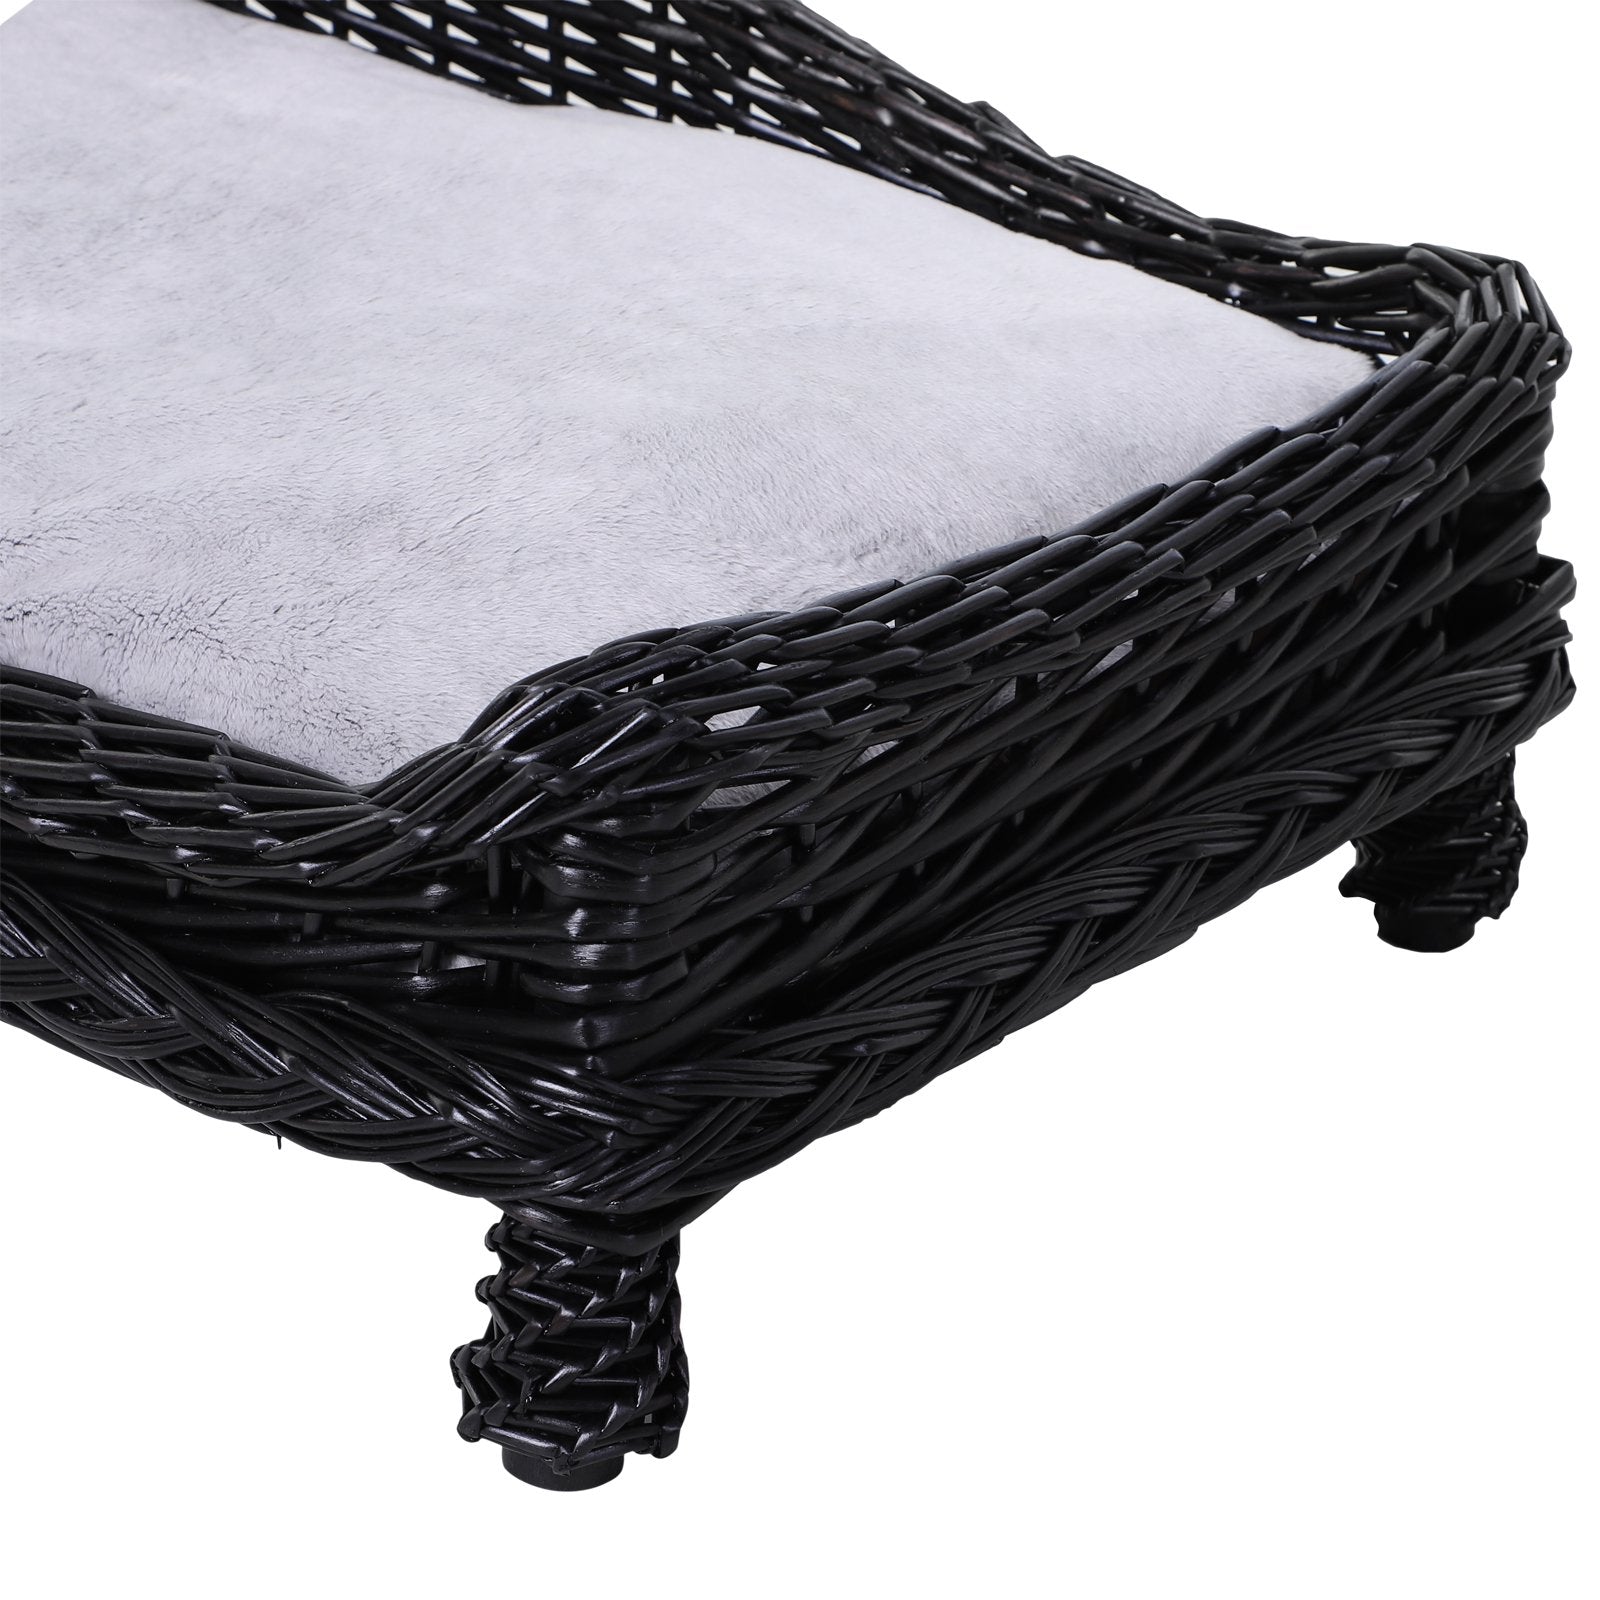 Dogs Lightweight Wicker Lounger Bed w/ Plush Cushion Black